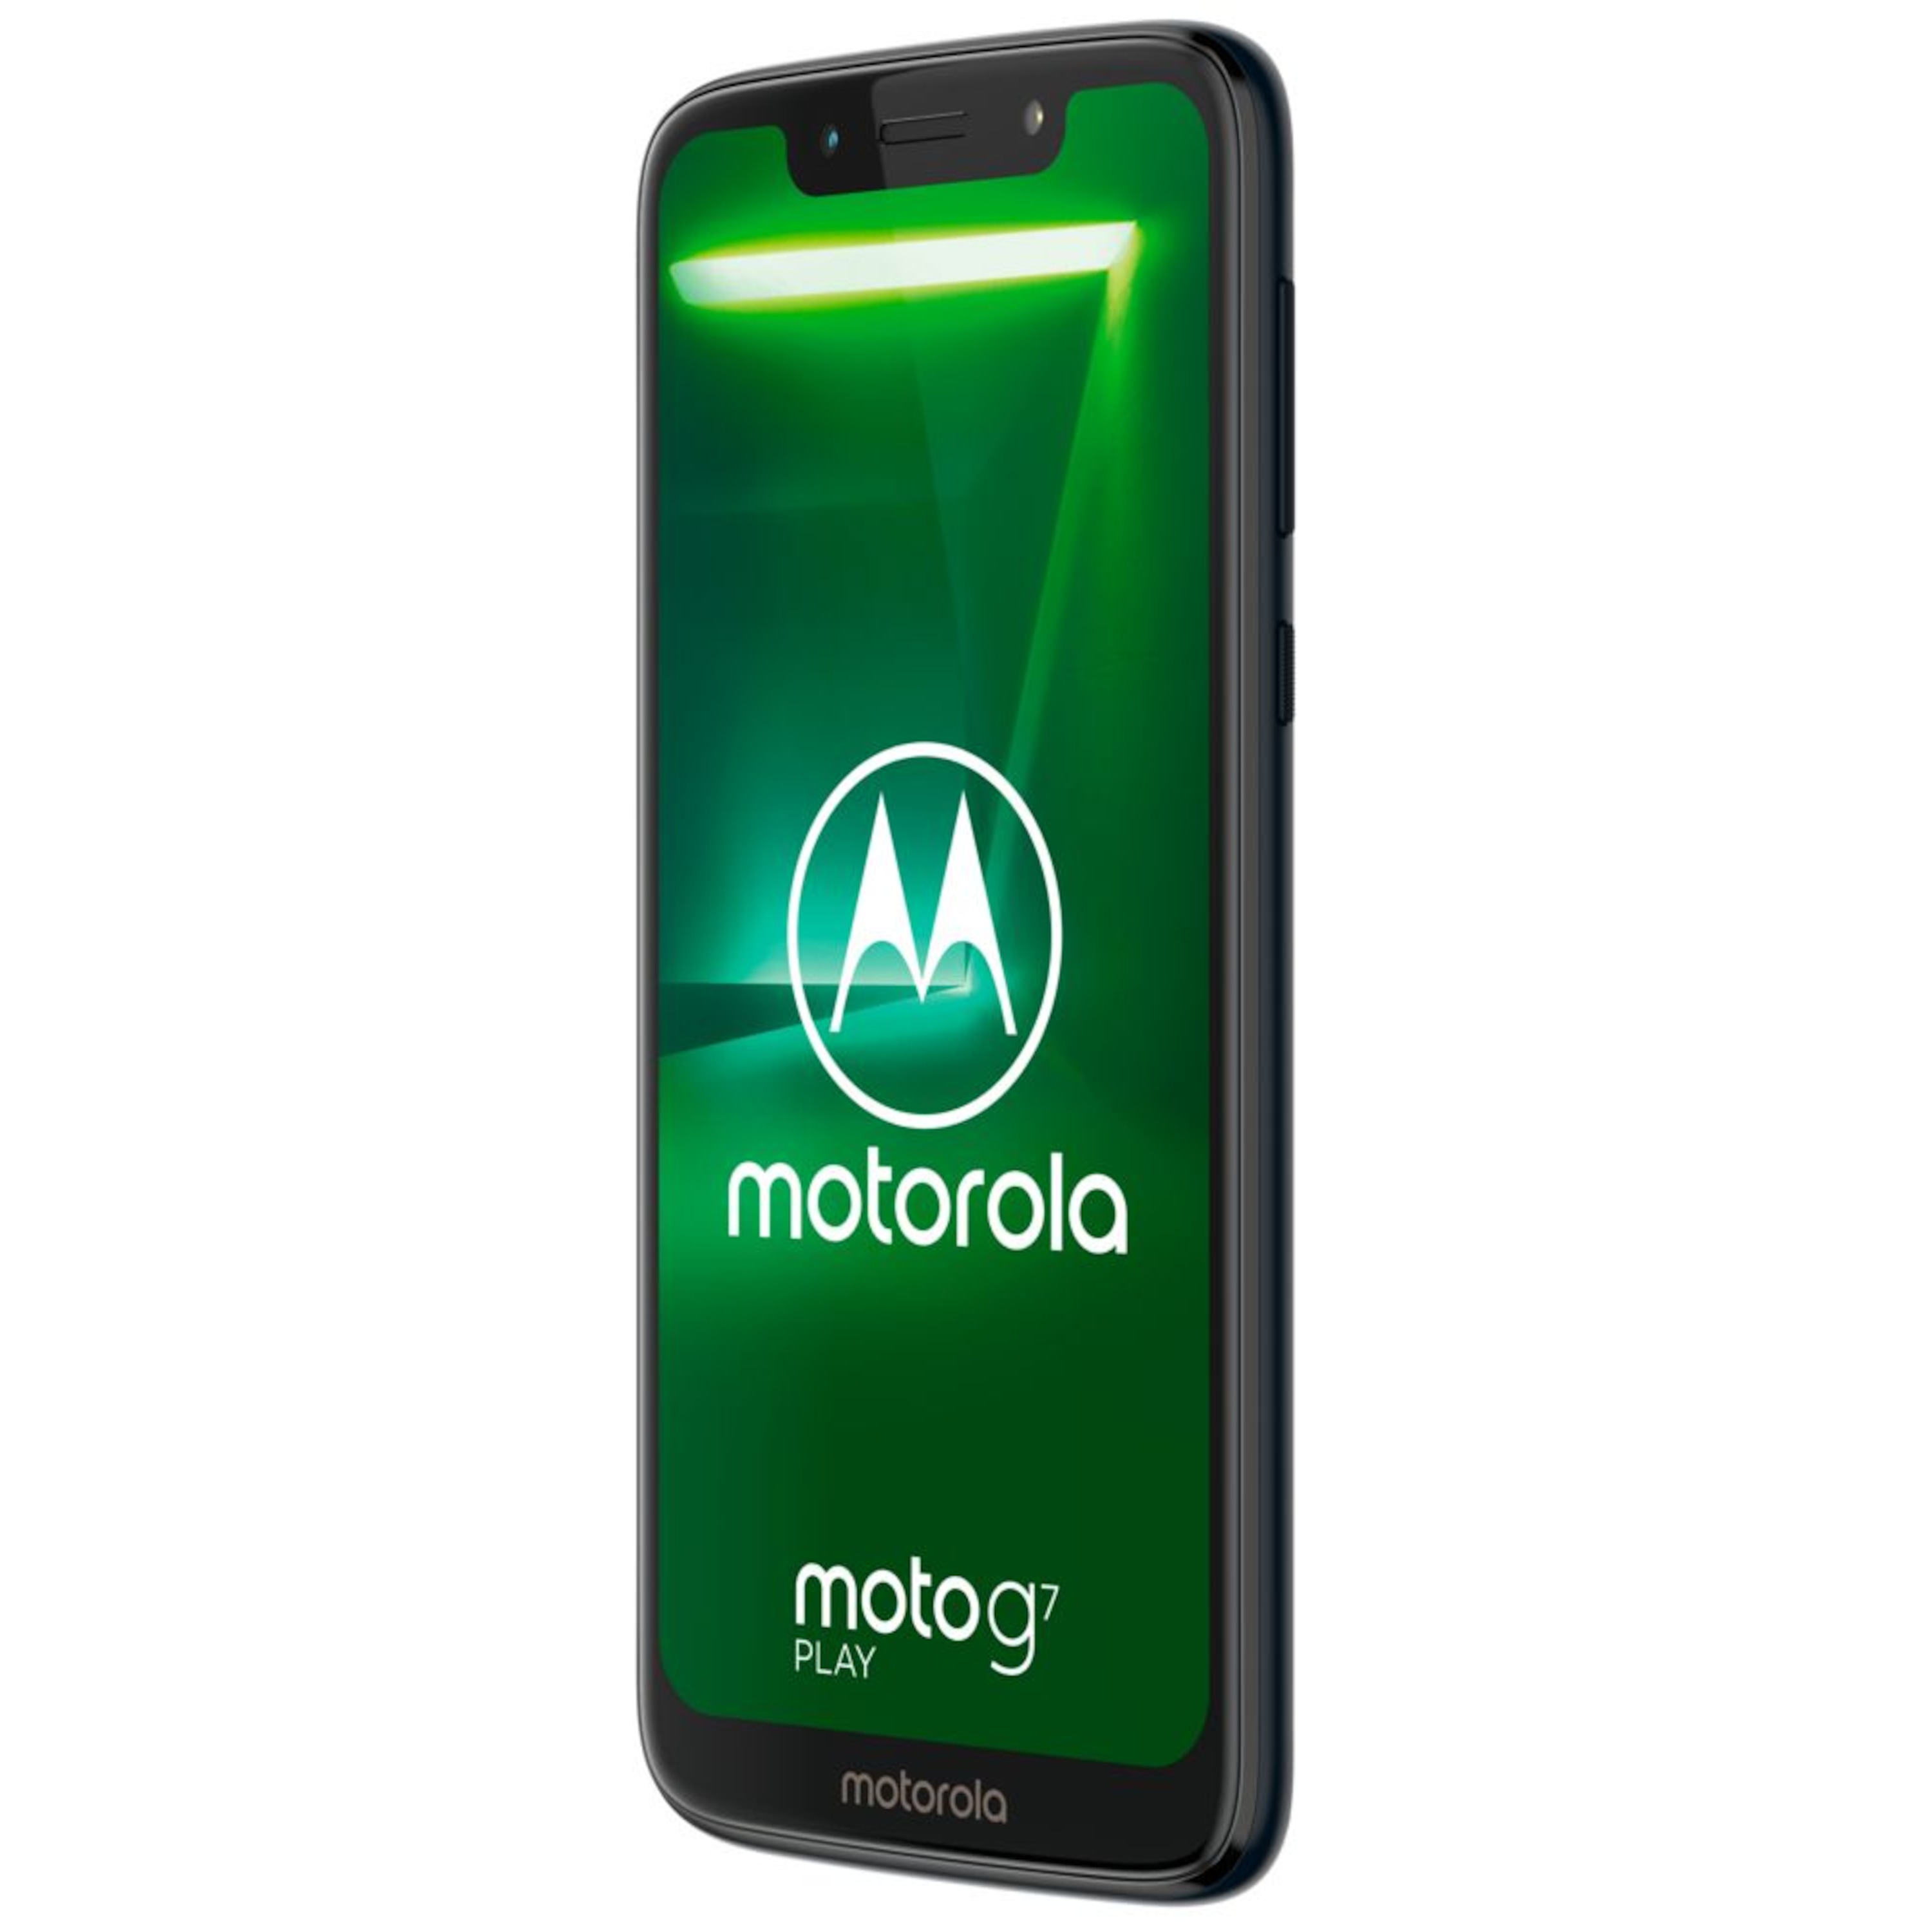 MOTOROLA moto g7 play Smartphone, 14,45 cm (5,69") Full-HD+ Display, Android™ 9.0, 32 GB Speicher, Octa-Core-Prozessor, Dual-SIM, LTE